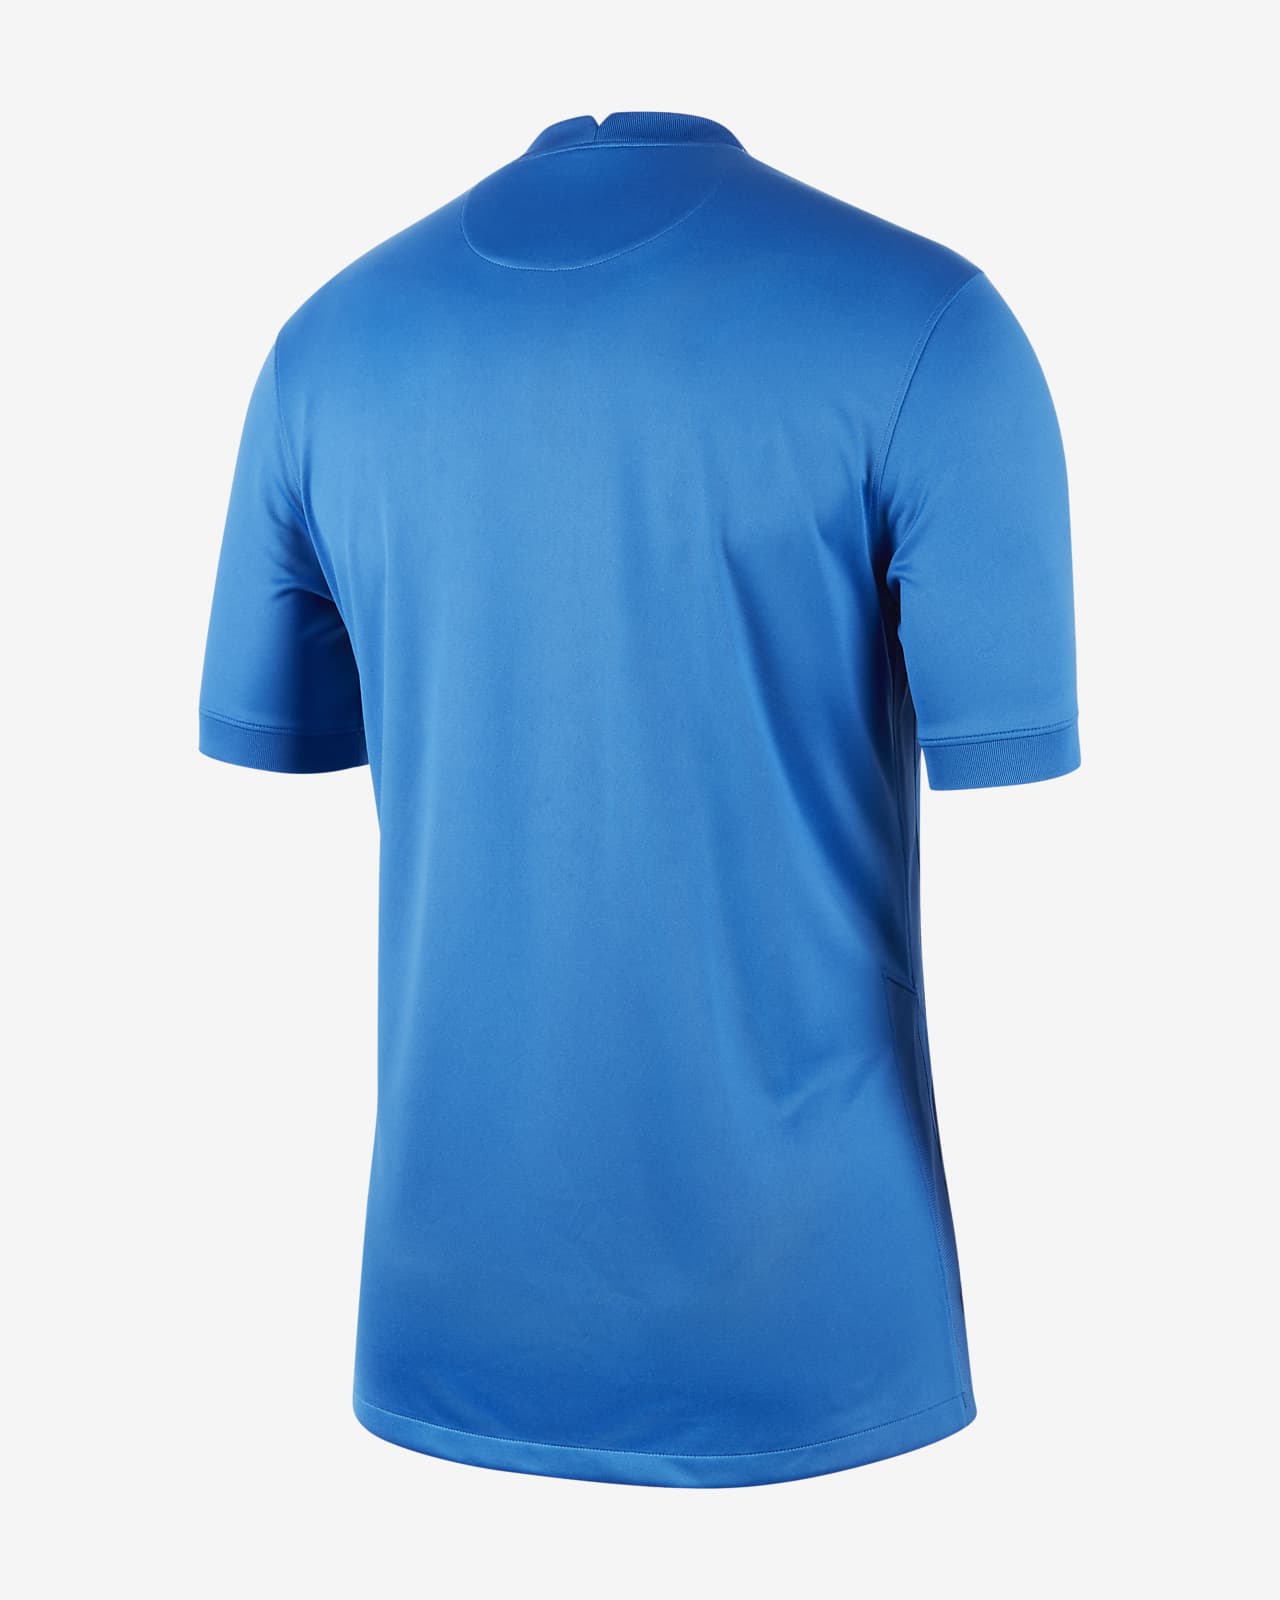 Greece 2020 Nike Away Shirt | 20/21 Kits | Football shirt blog